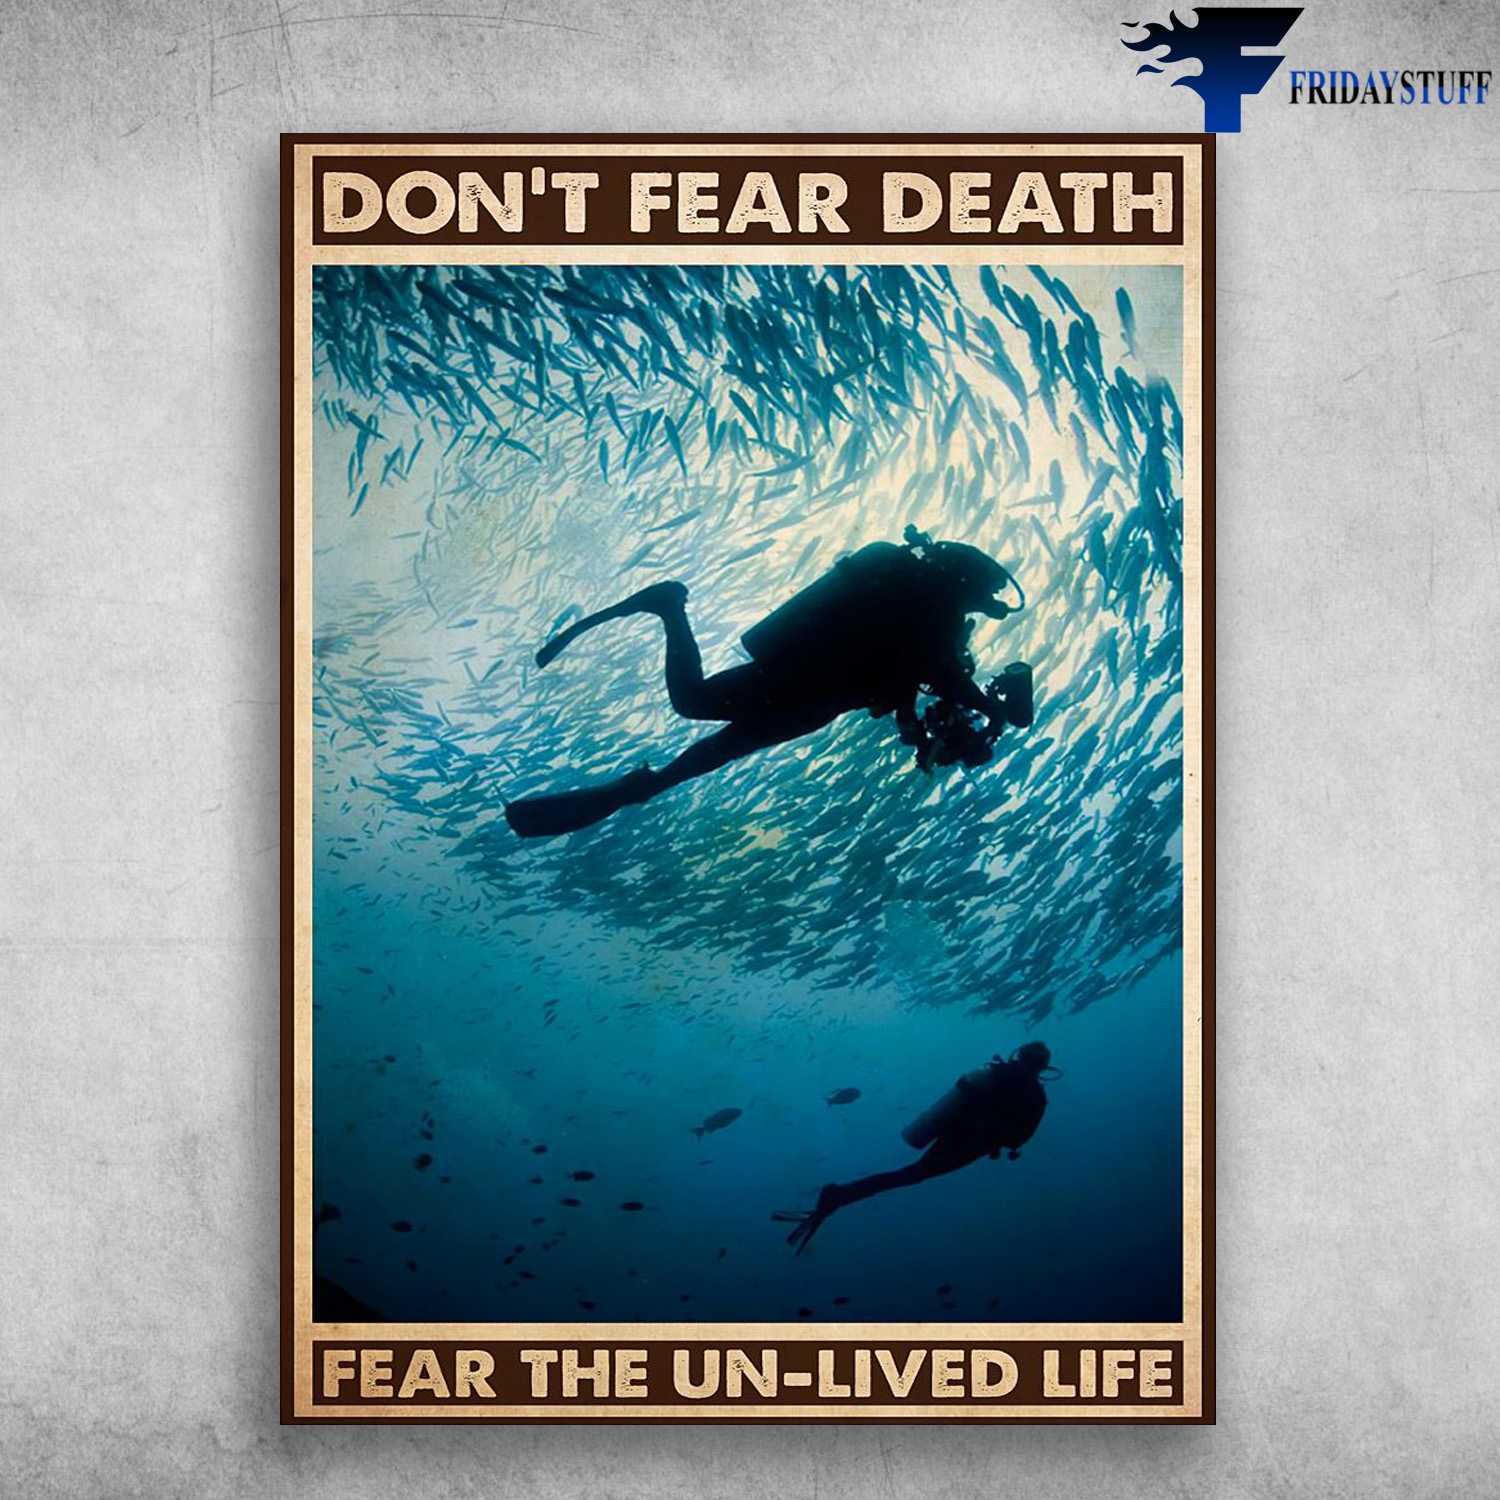 Scuba Diving In Ocean - Don't Fear Death, Fear The Un-lived Life